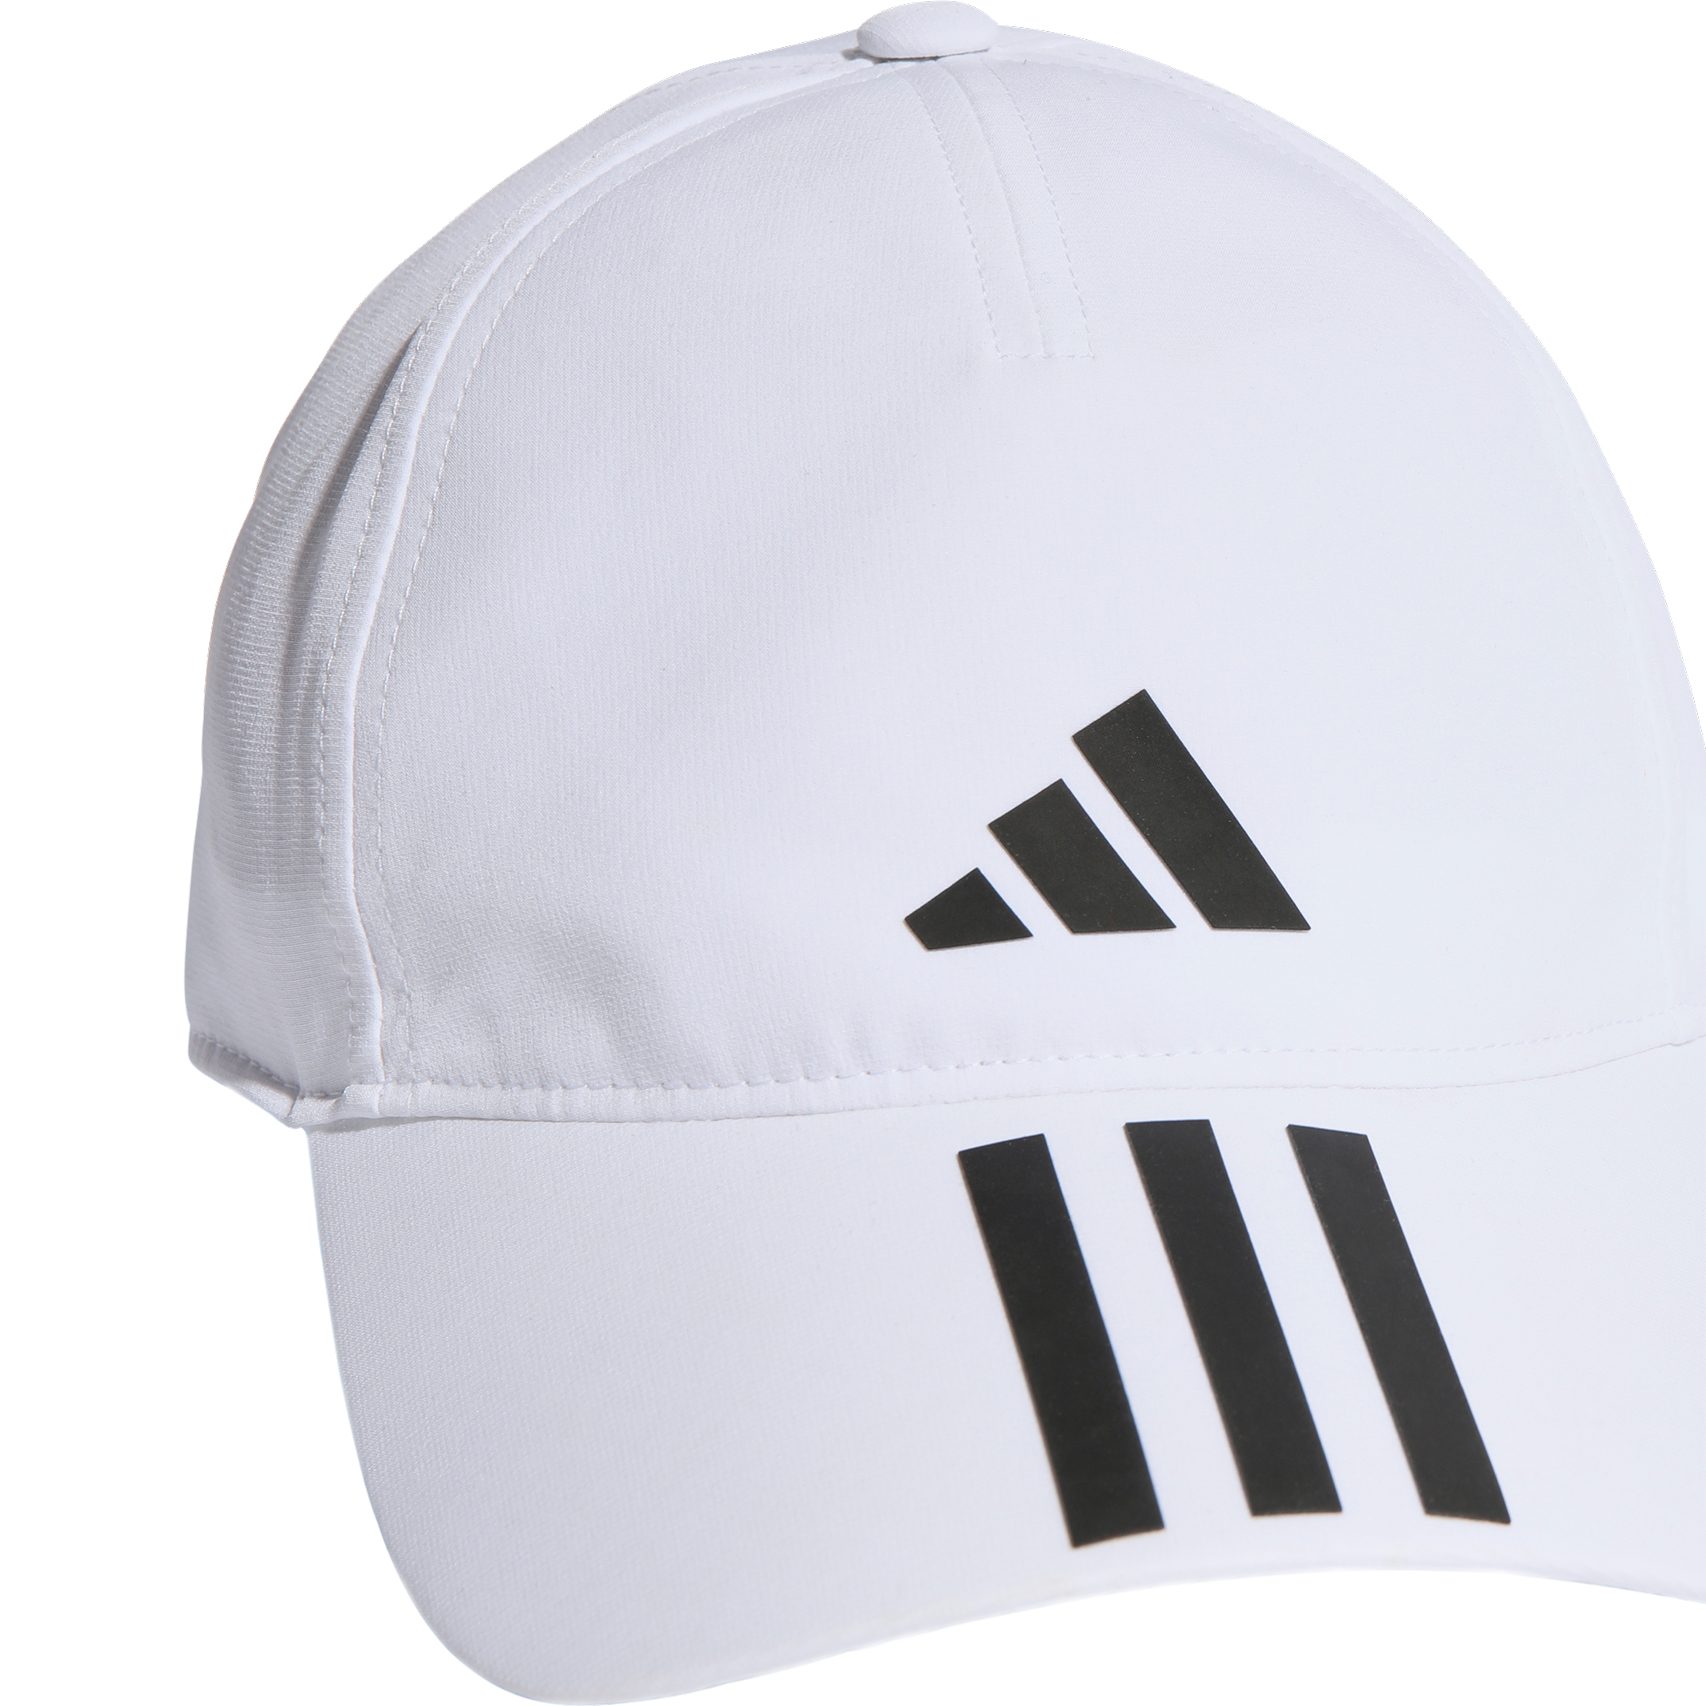 at 3-Stripes AEROREADY Running adidas Sport Bittl Training white Shop Baseball Cap -